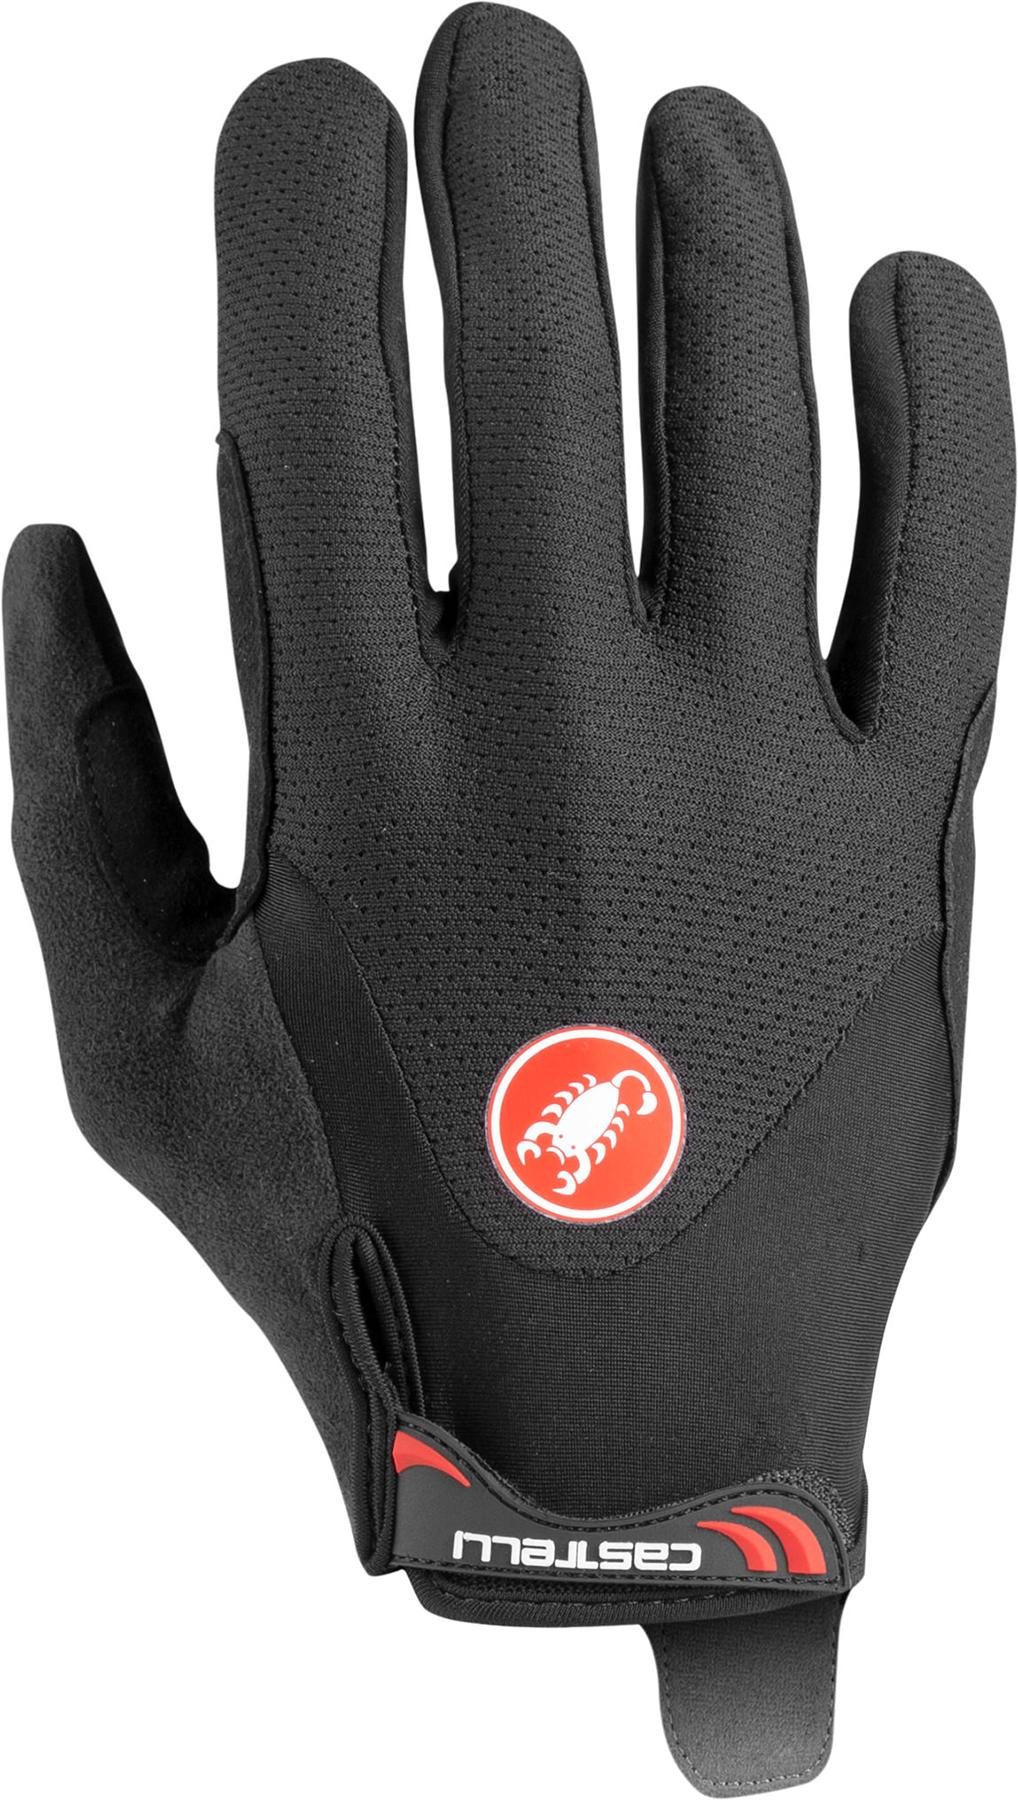 Castelli Arenberg Gel Cycling Gloves - Black